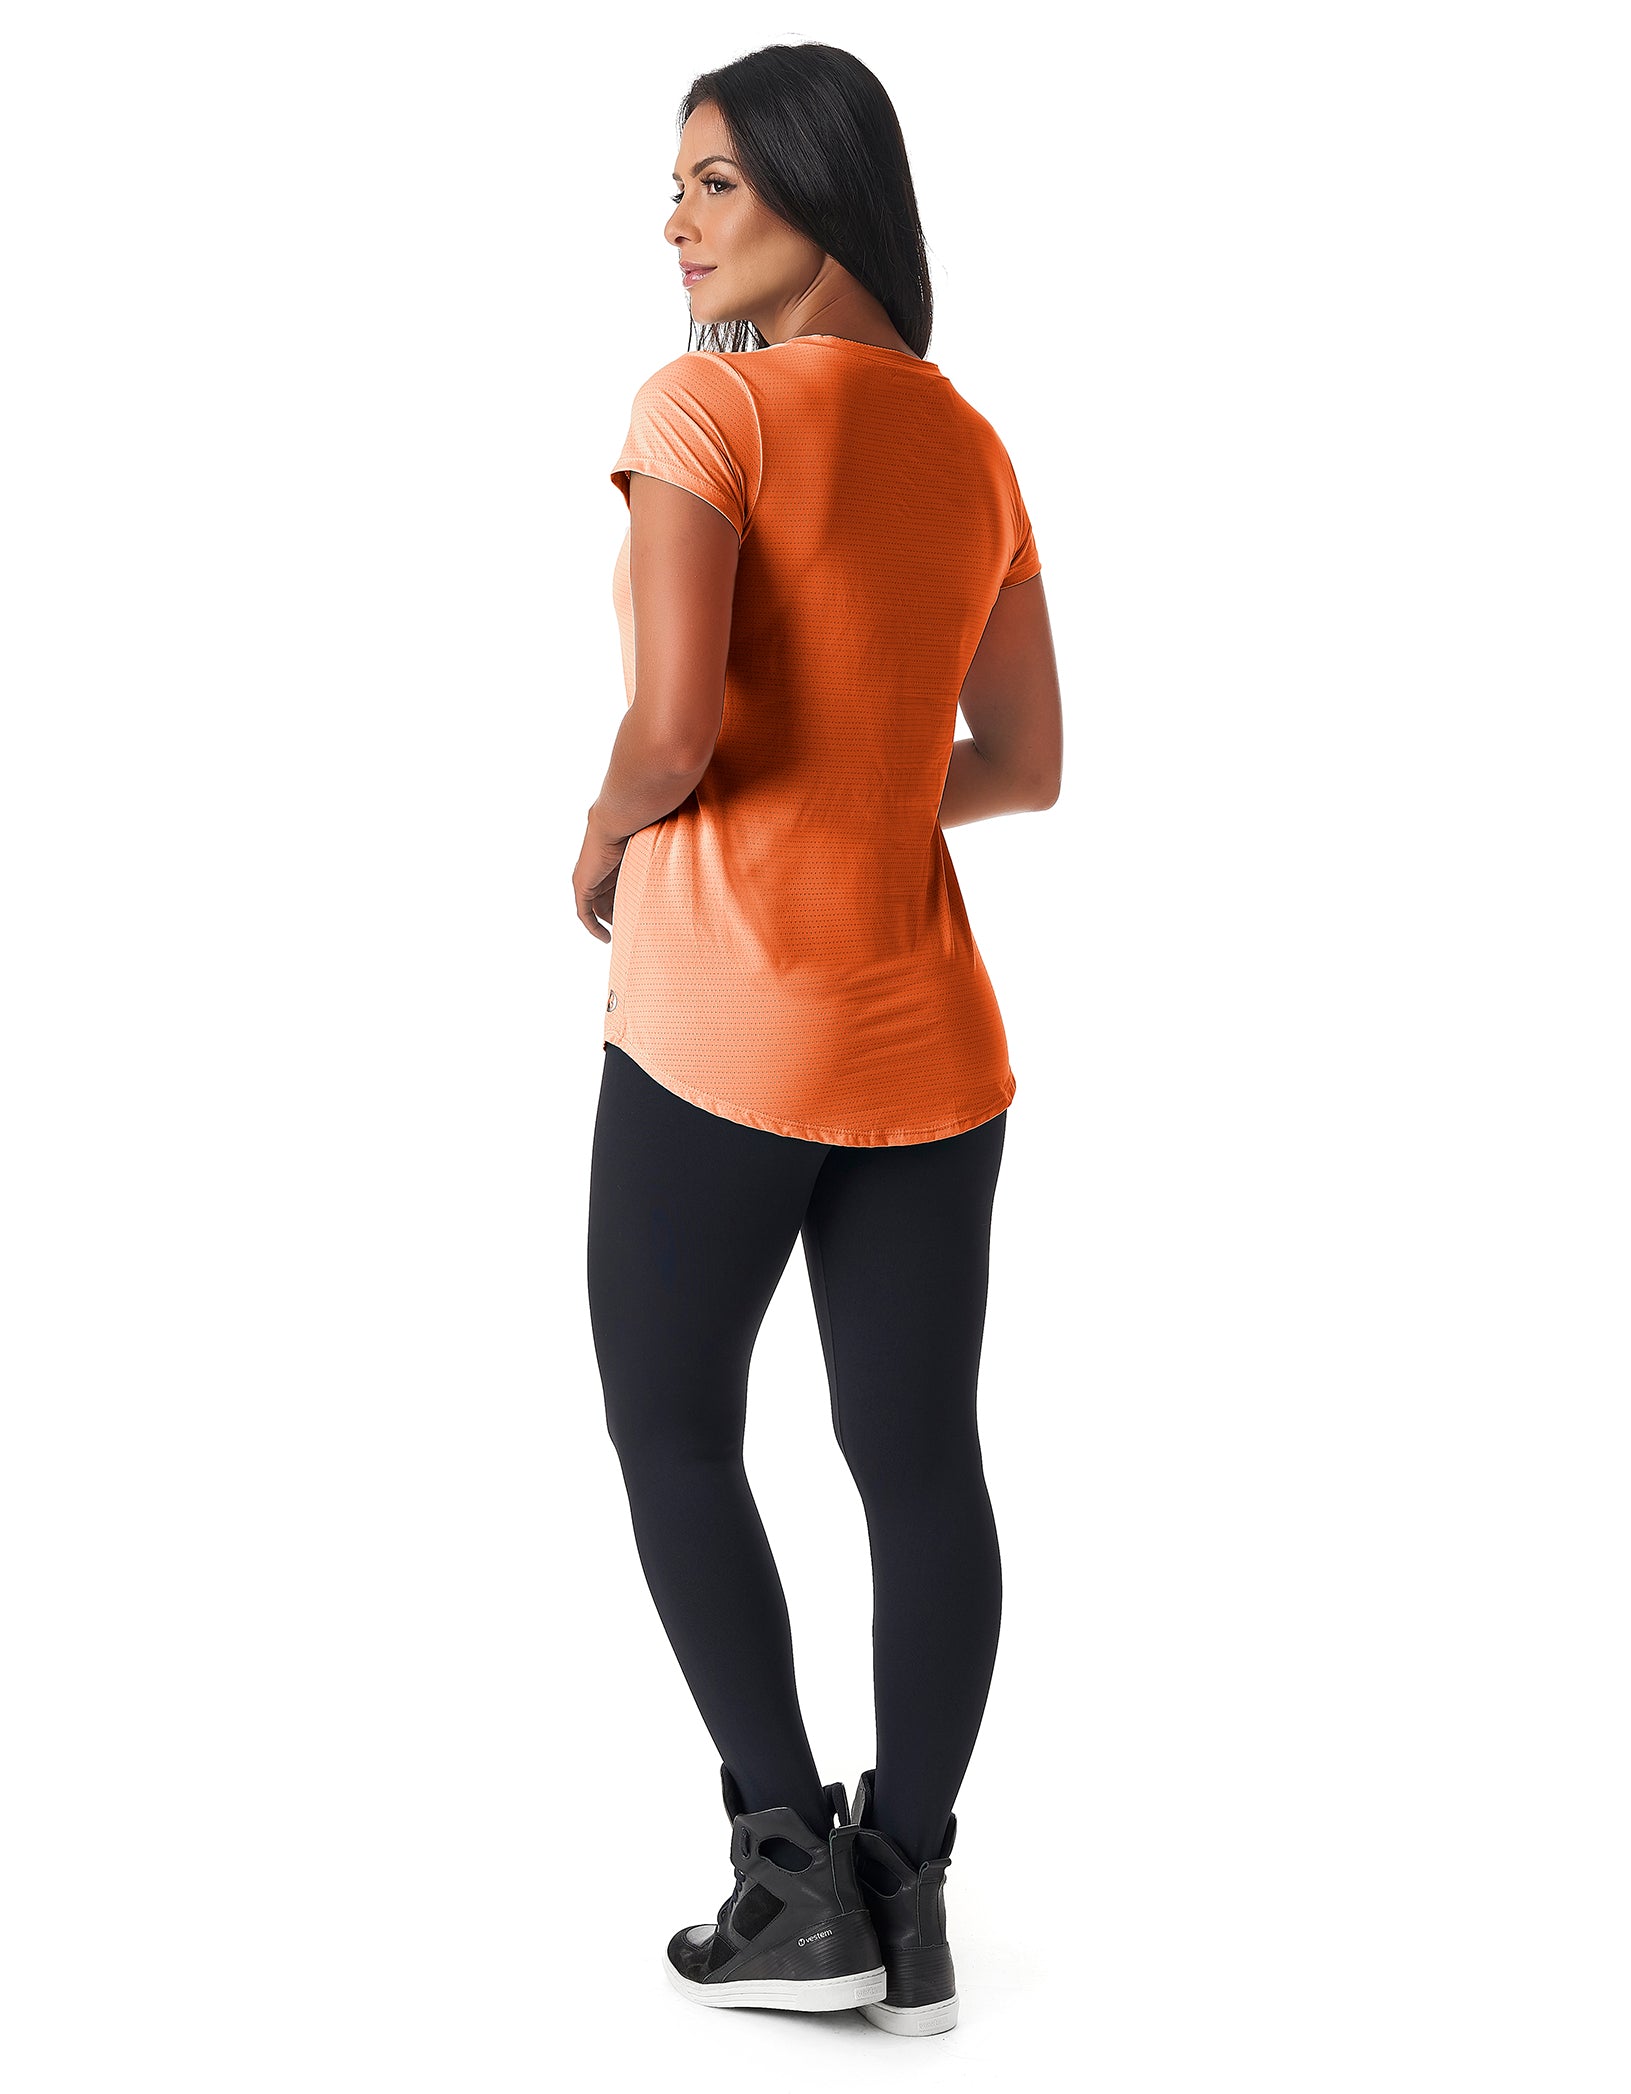 Vestem - Shirt Dry Fit Short Sleeve Janice Orange Neon - BMC31C0007